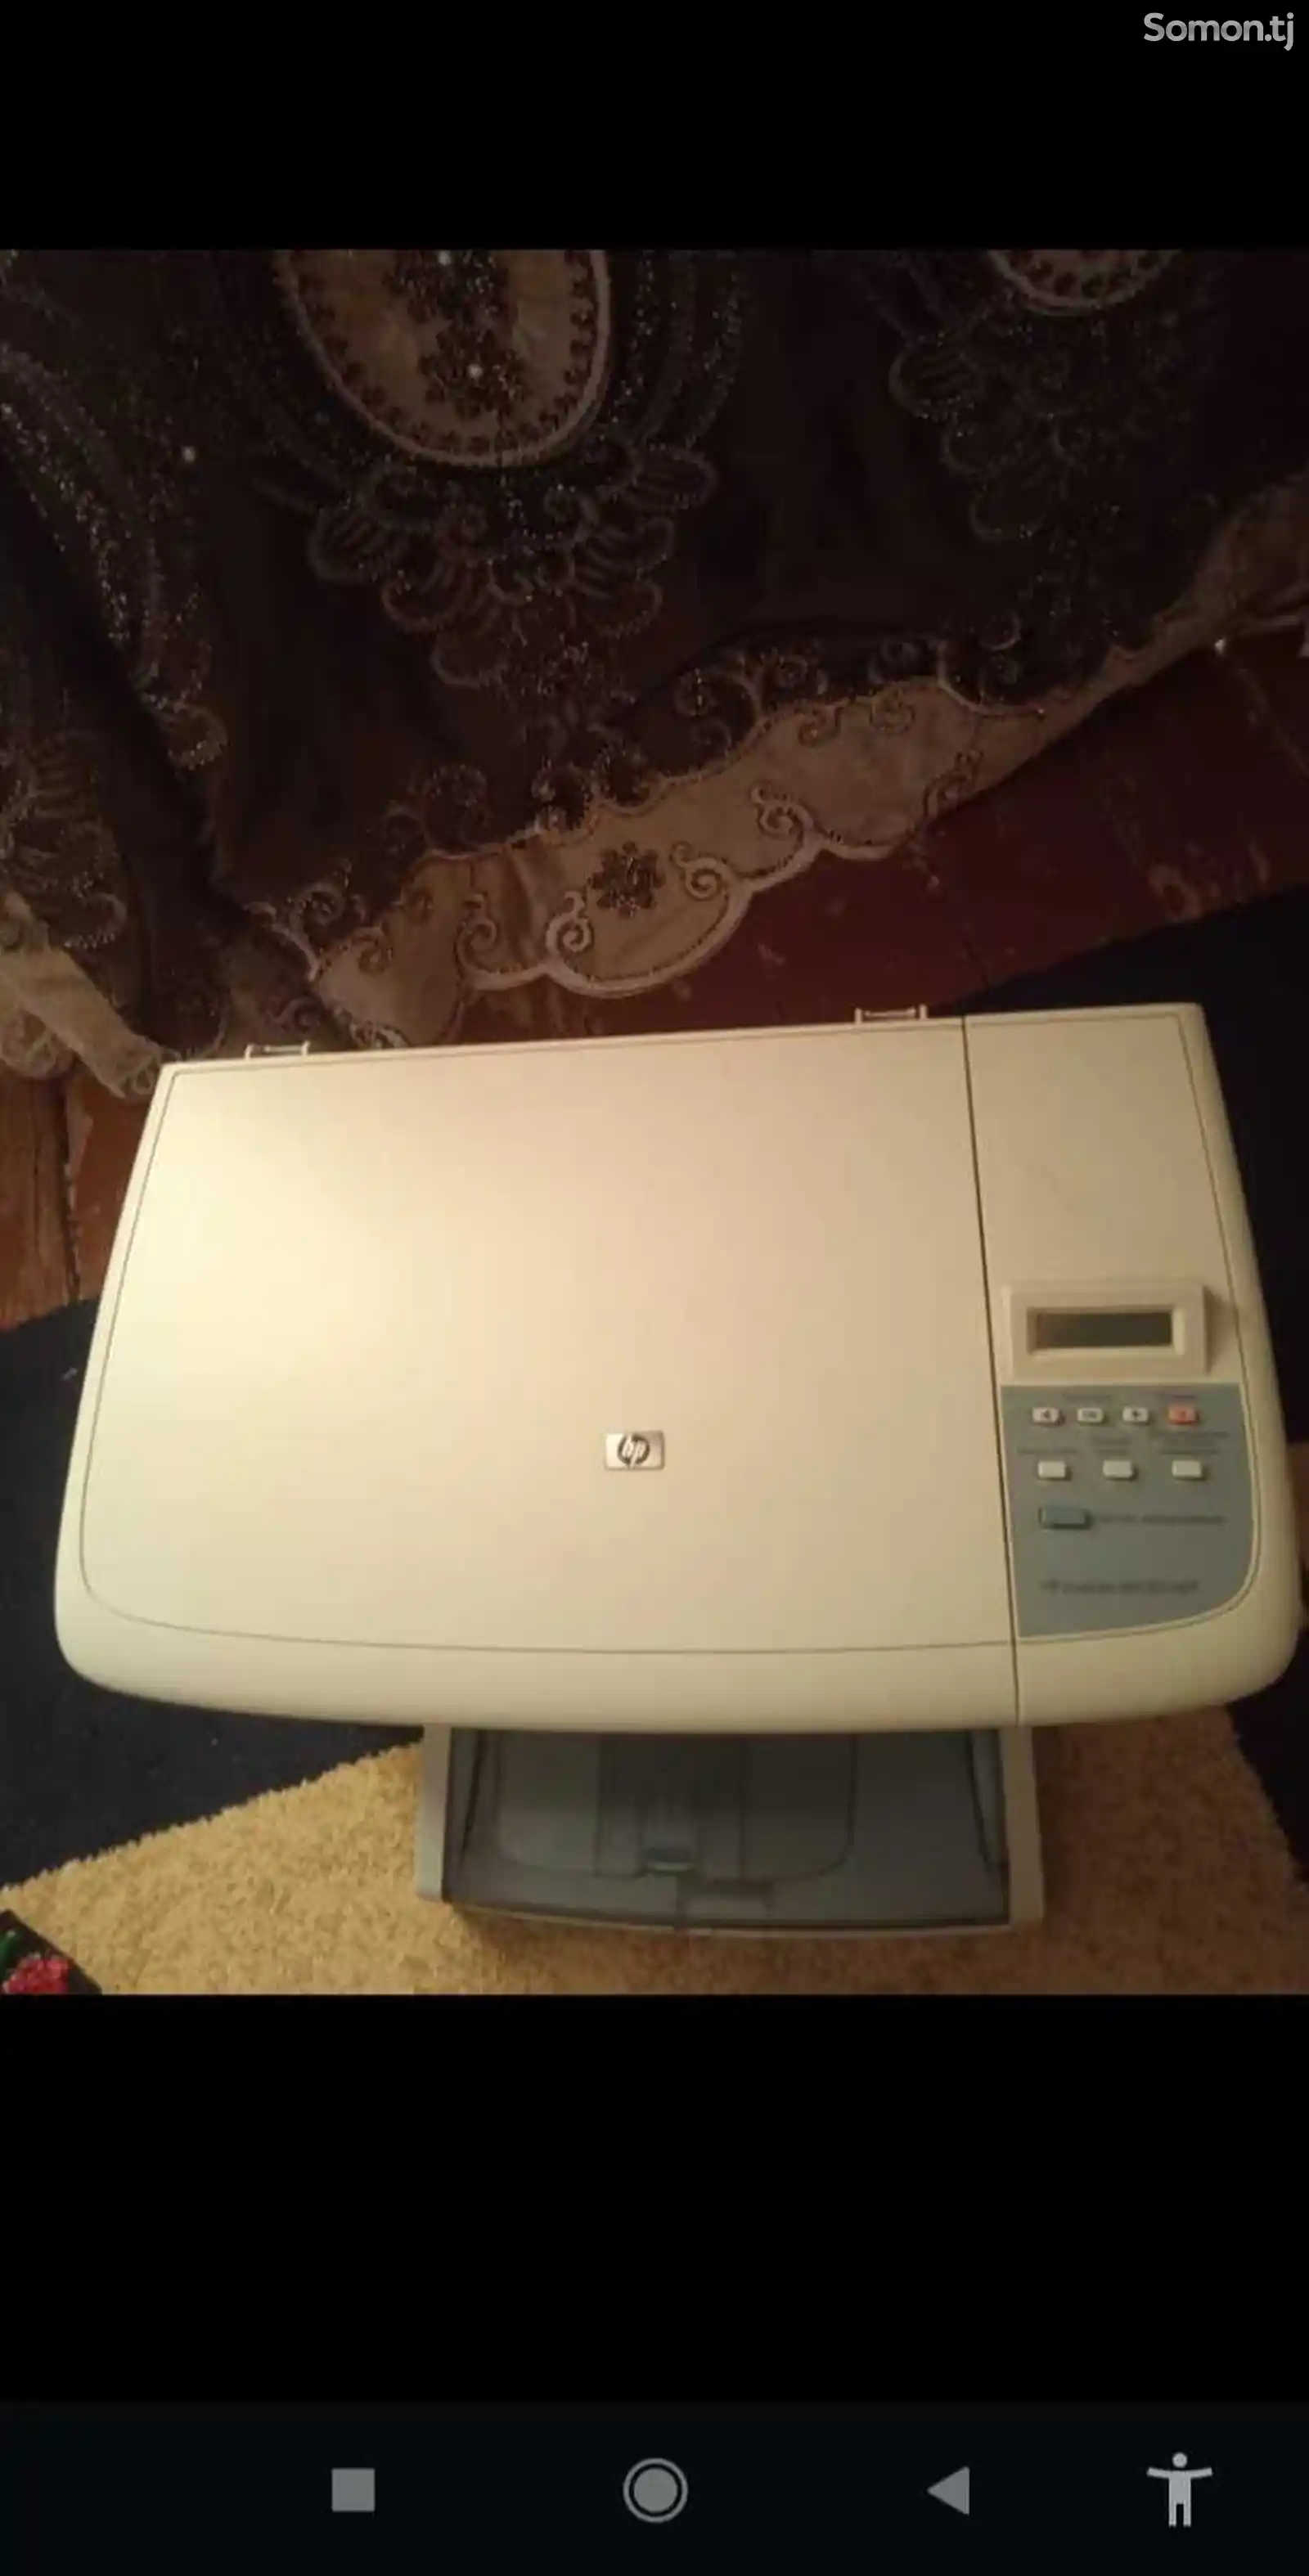 Принтер HP-1